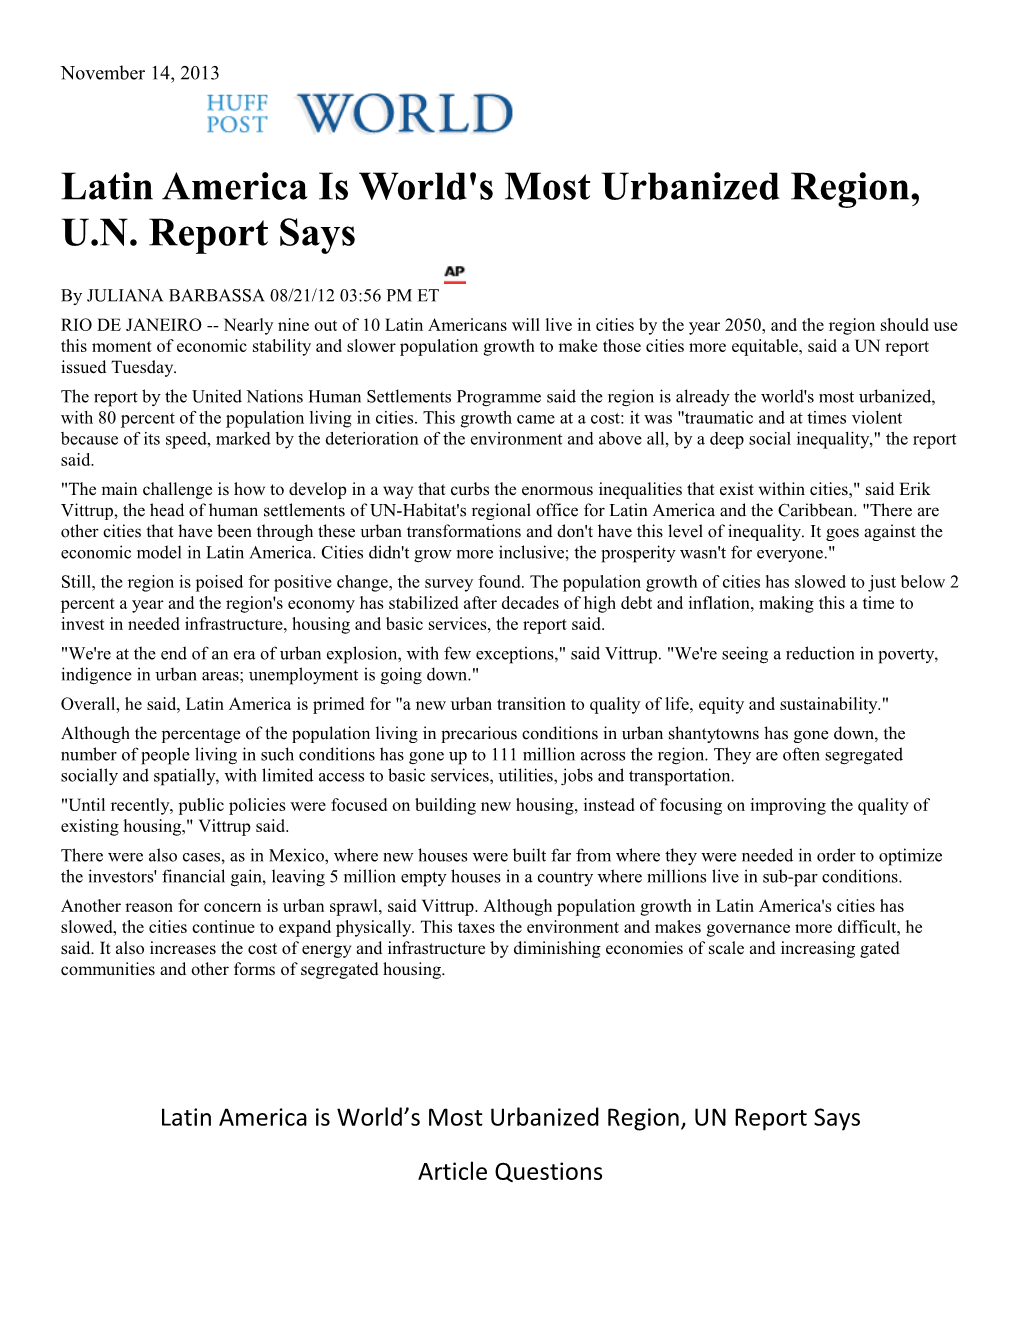 Latin America Is World's Most Urbanized Region, U.N. Report Says